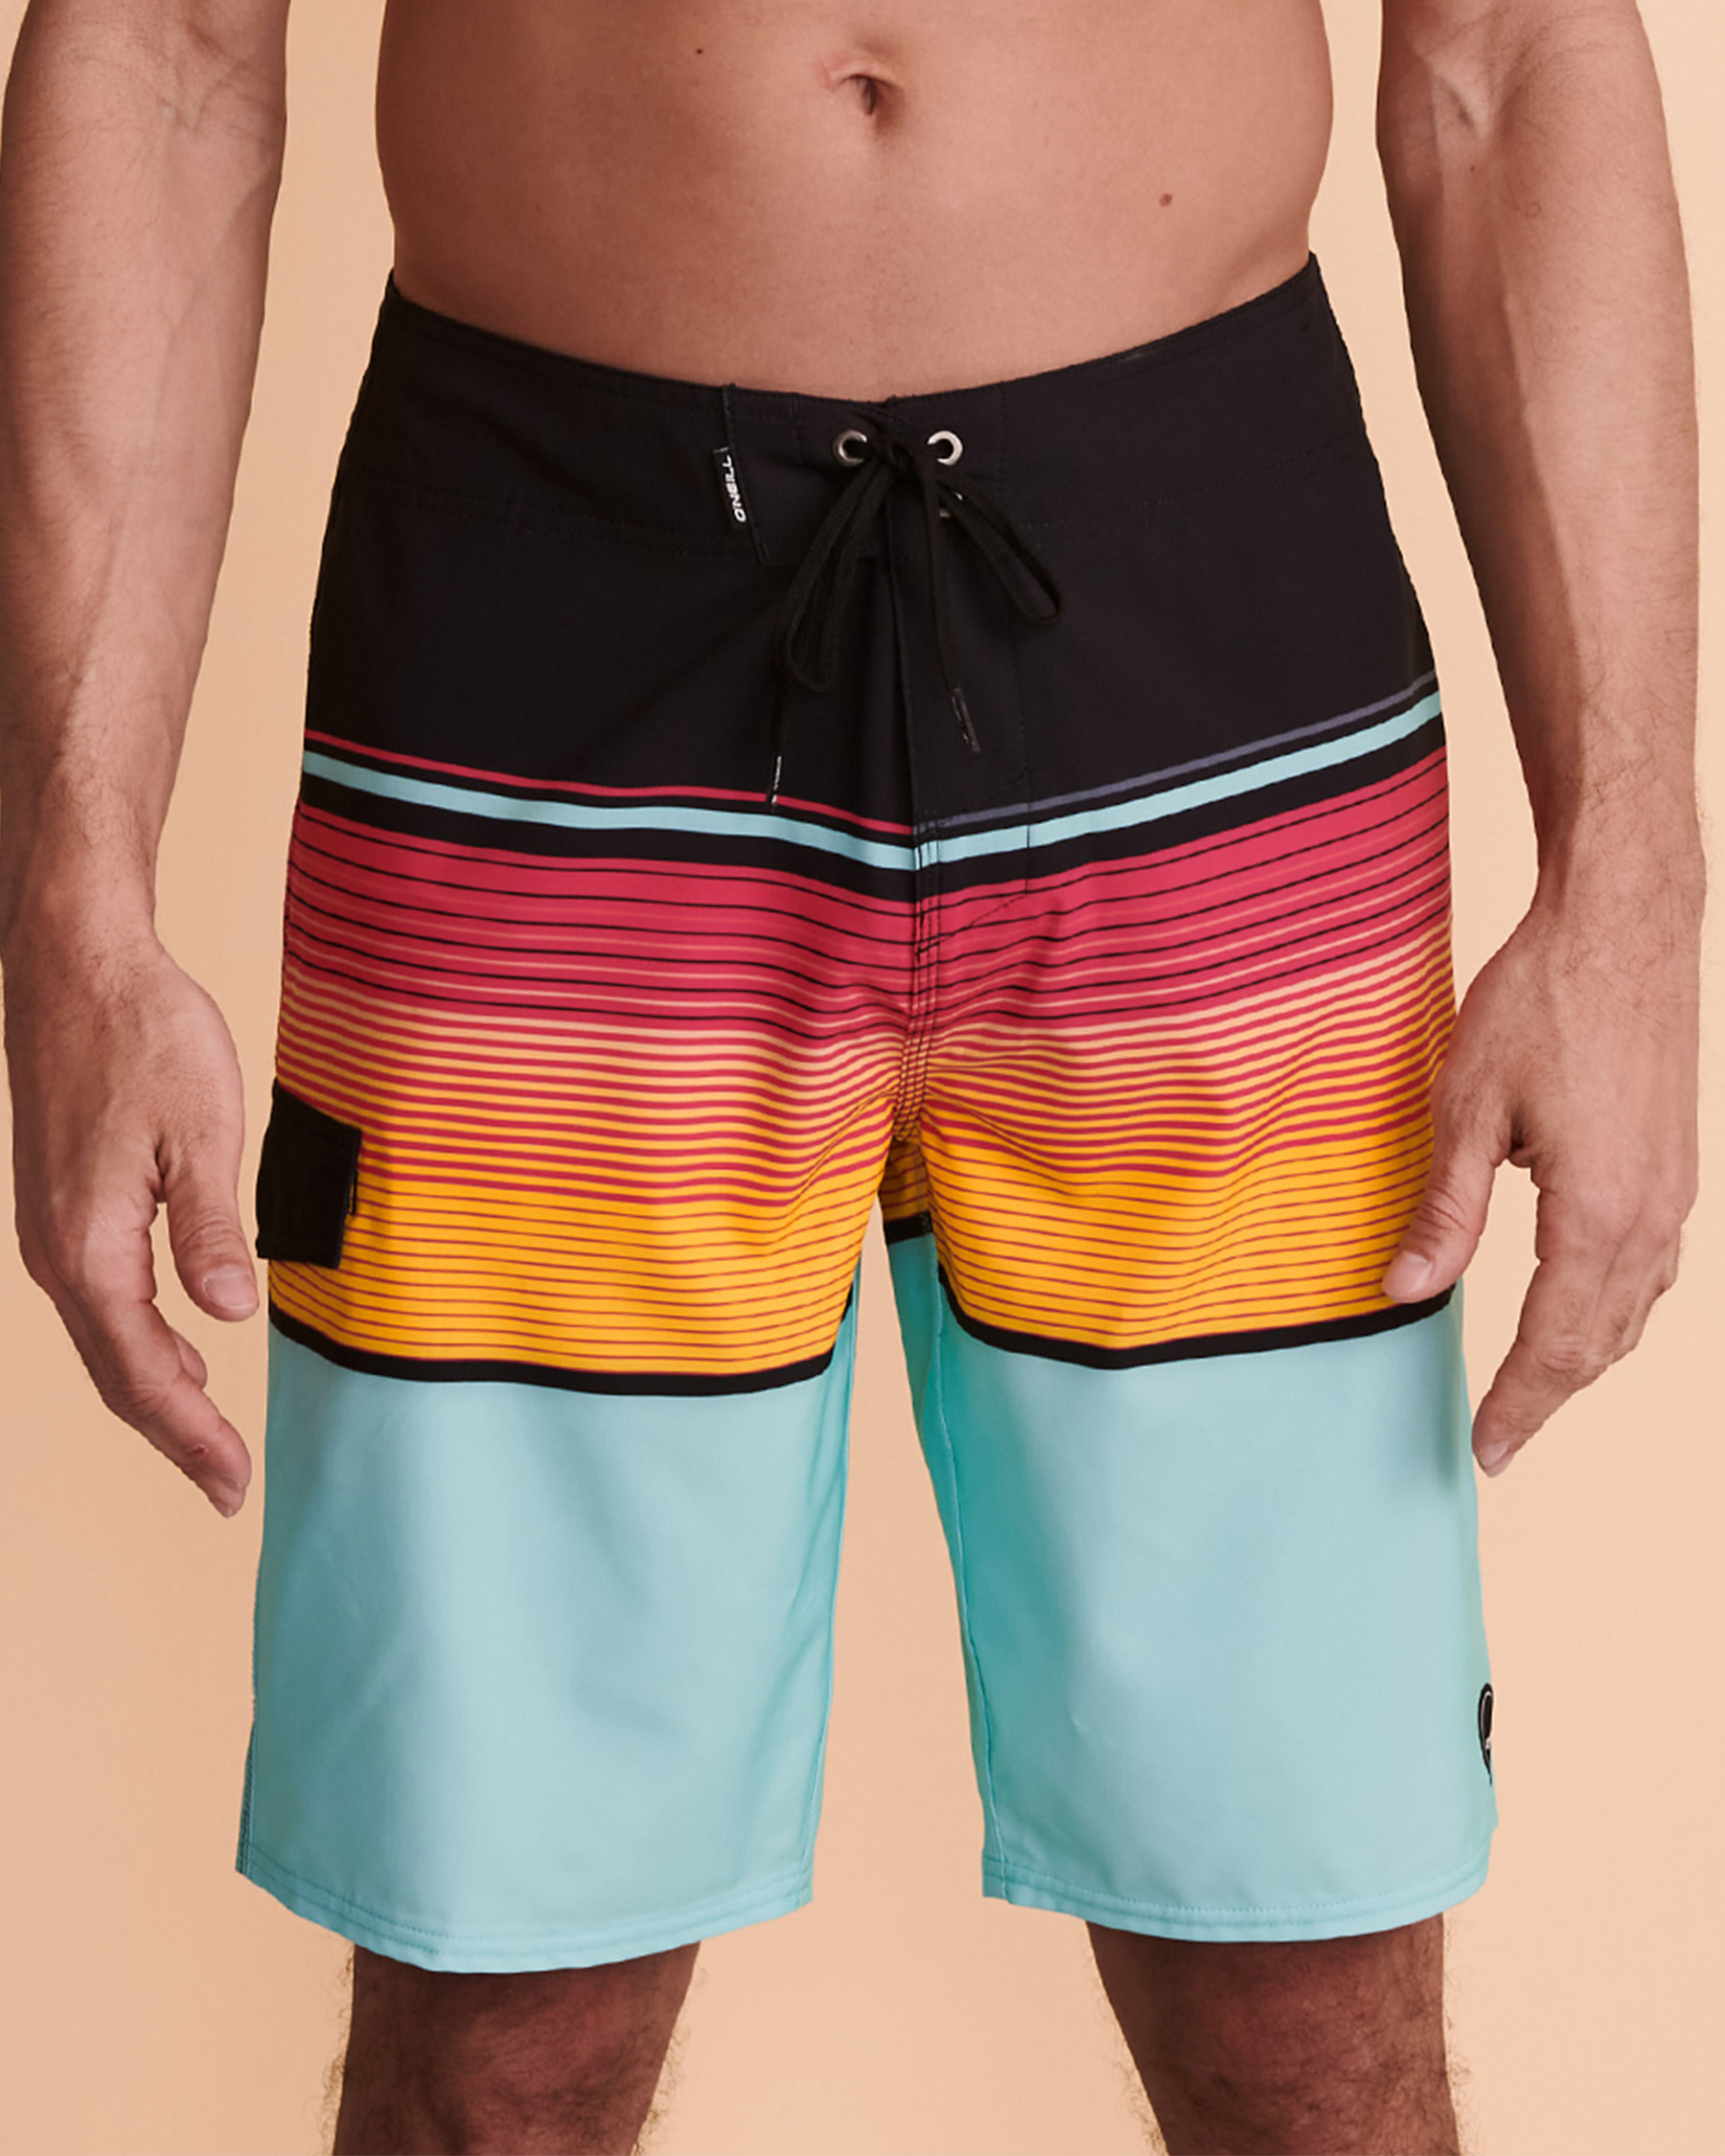 O'NEILL LENNOX STRETCH Boardshort Swimsuit Multi stripes SP2106011 - View1